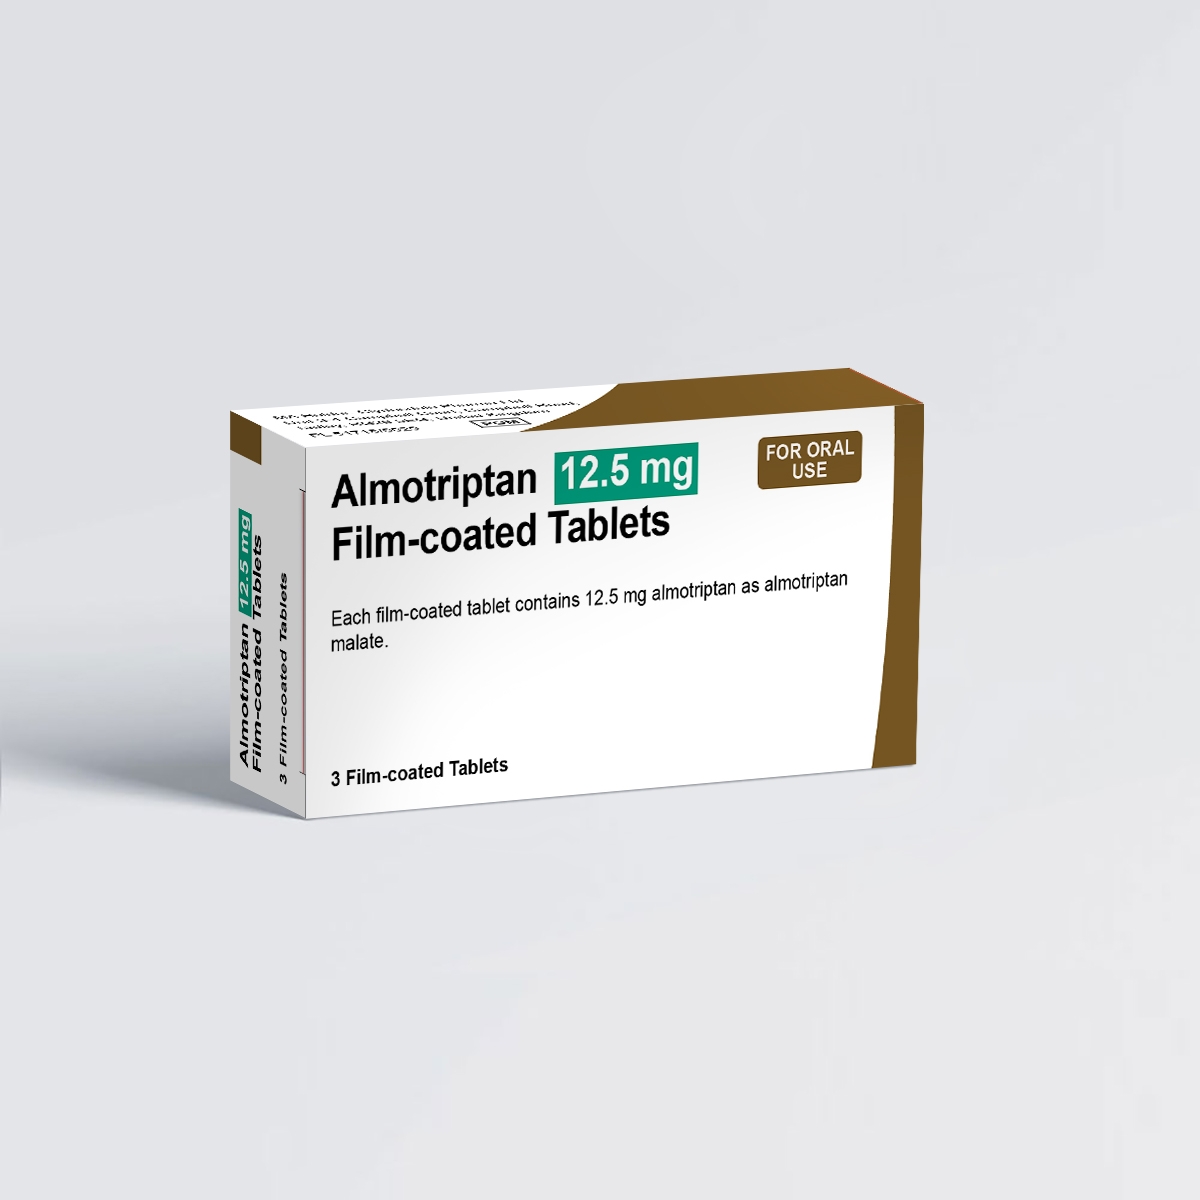 Almotriptan 12.5mg Film-coated tablets